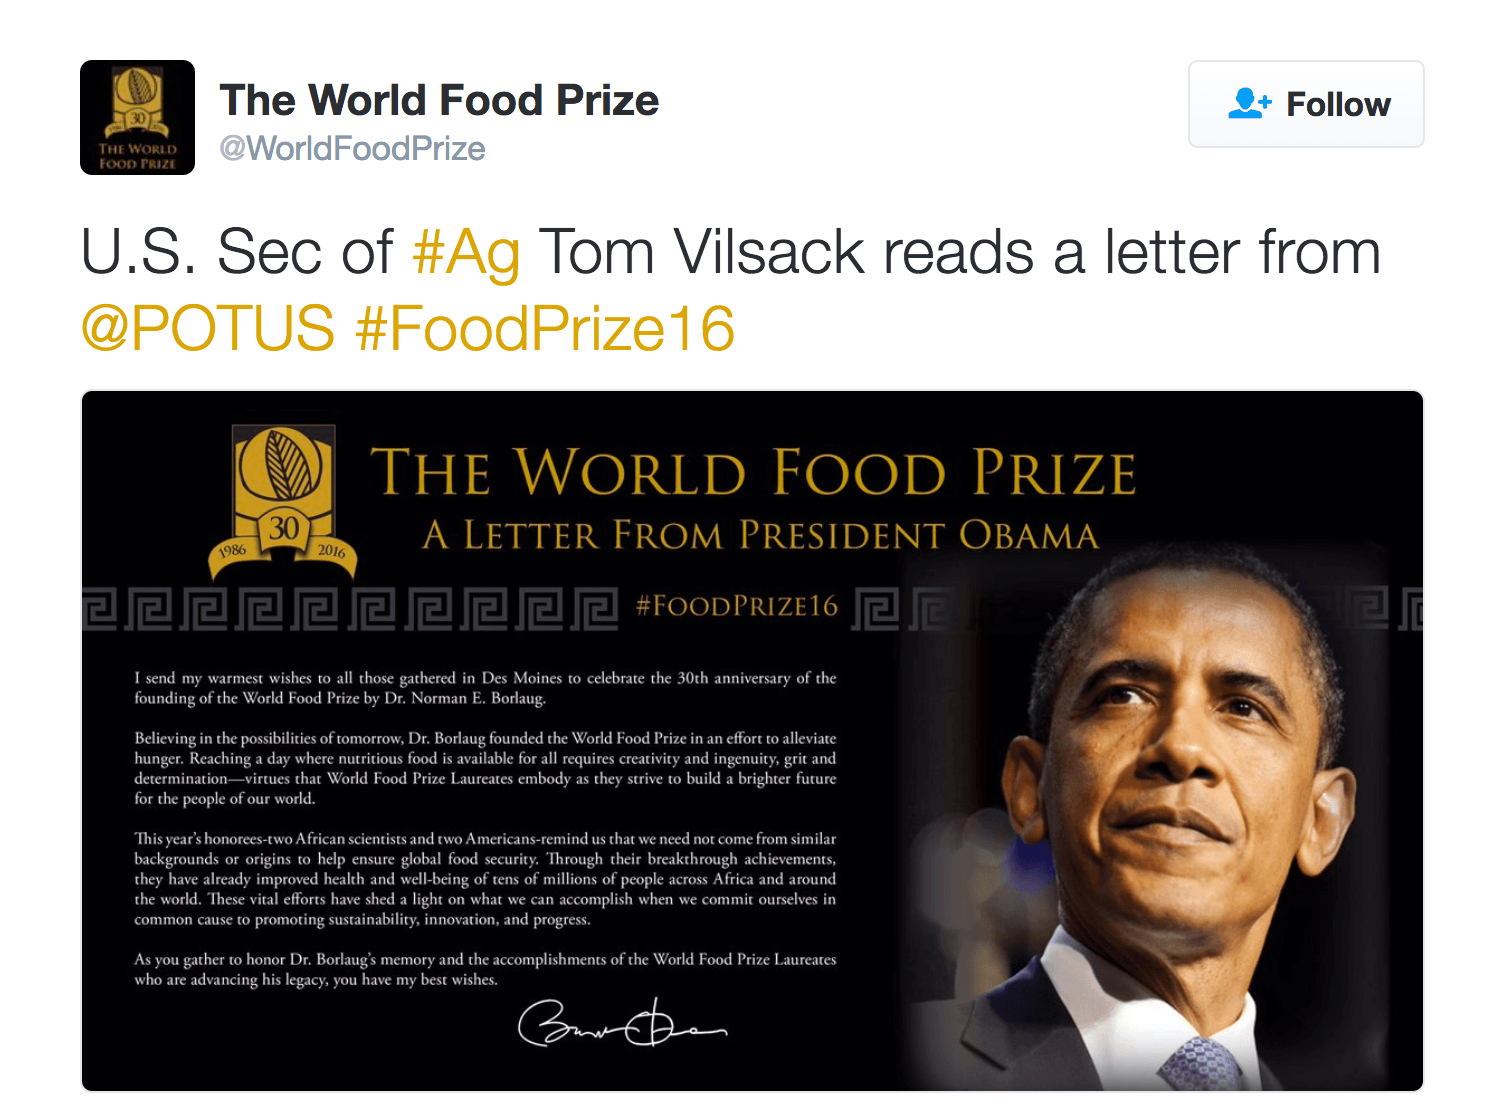 U.S. Sec of #Ag Tom Vilsack reads a letter from @POTUS #FoodPrize16